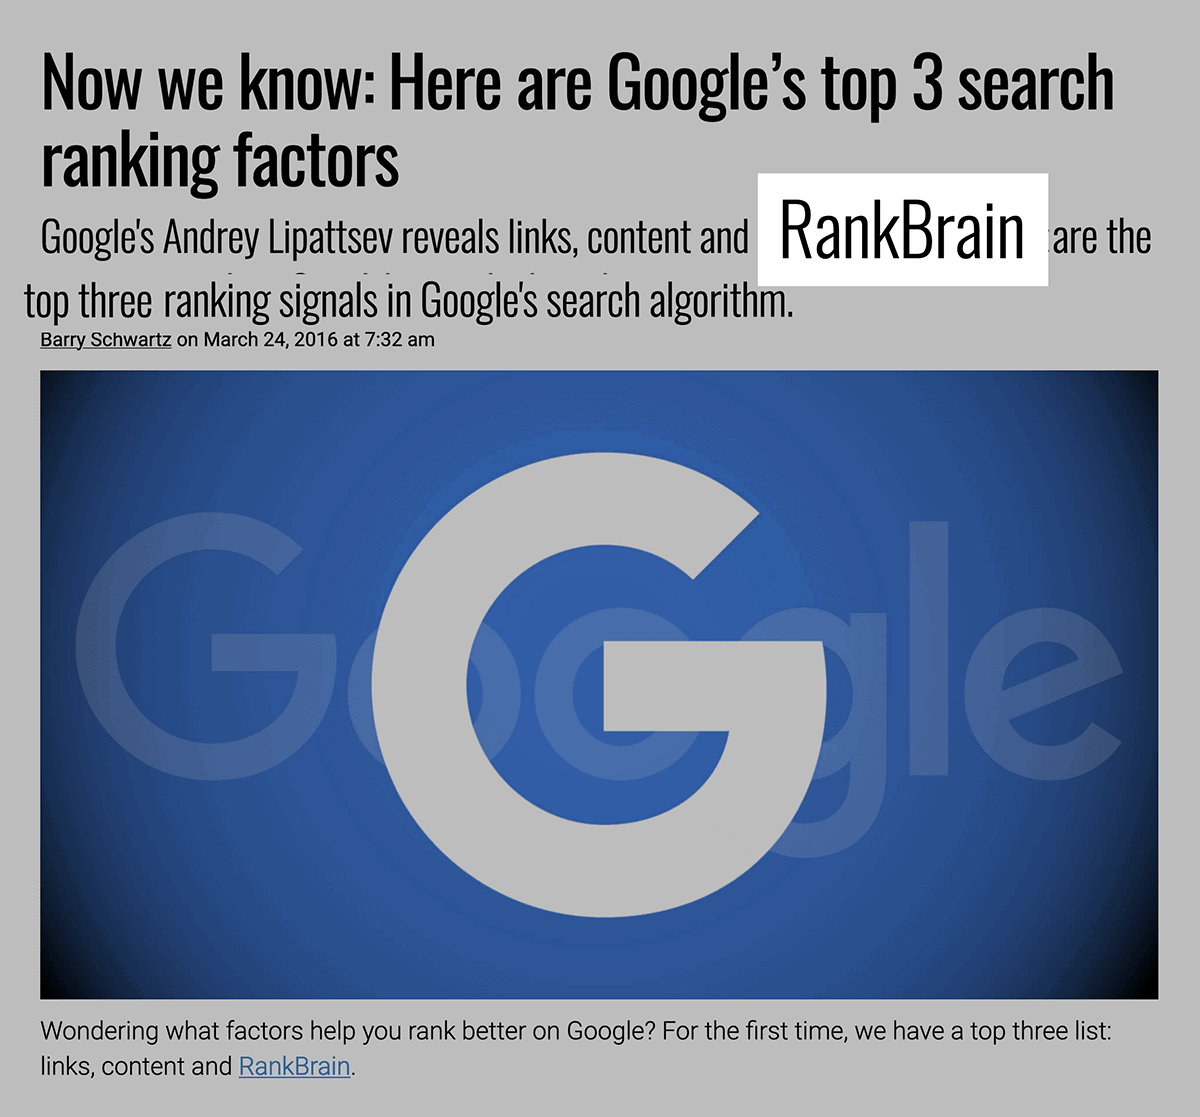 Google's top three ranking factors